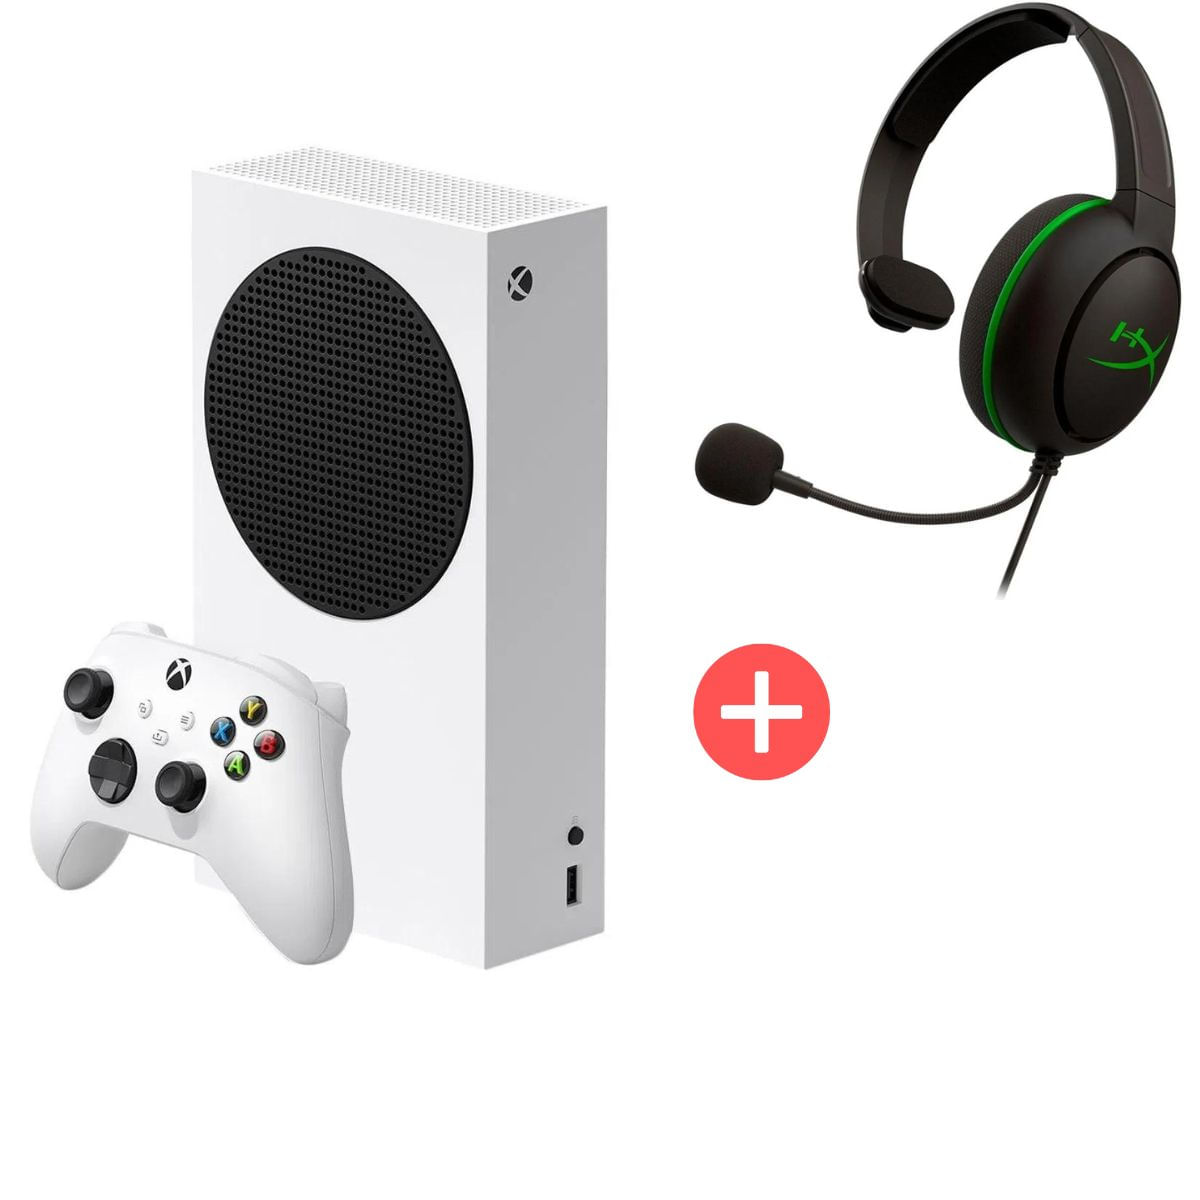 Solucionar problemas do Headset para bate-papo Xbox One